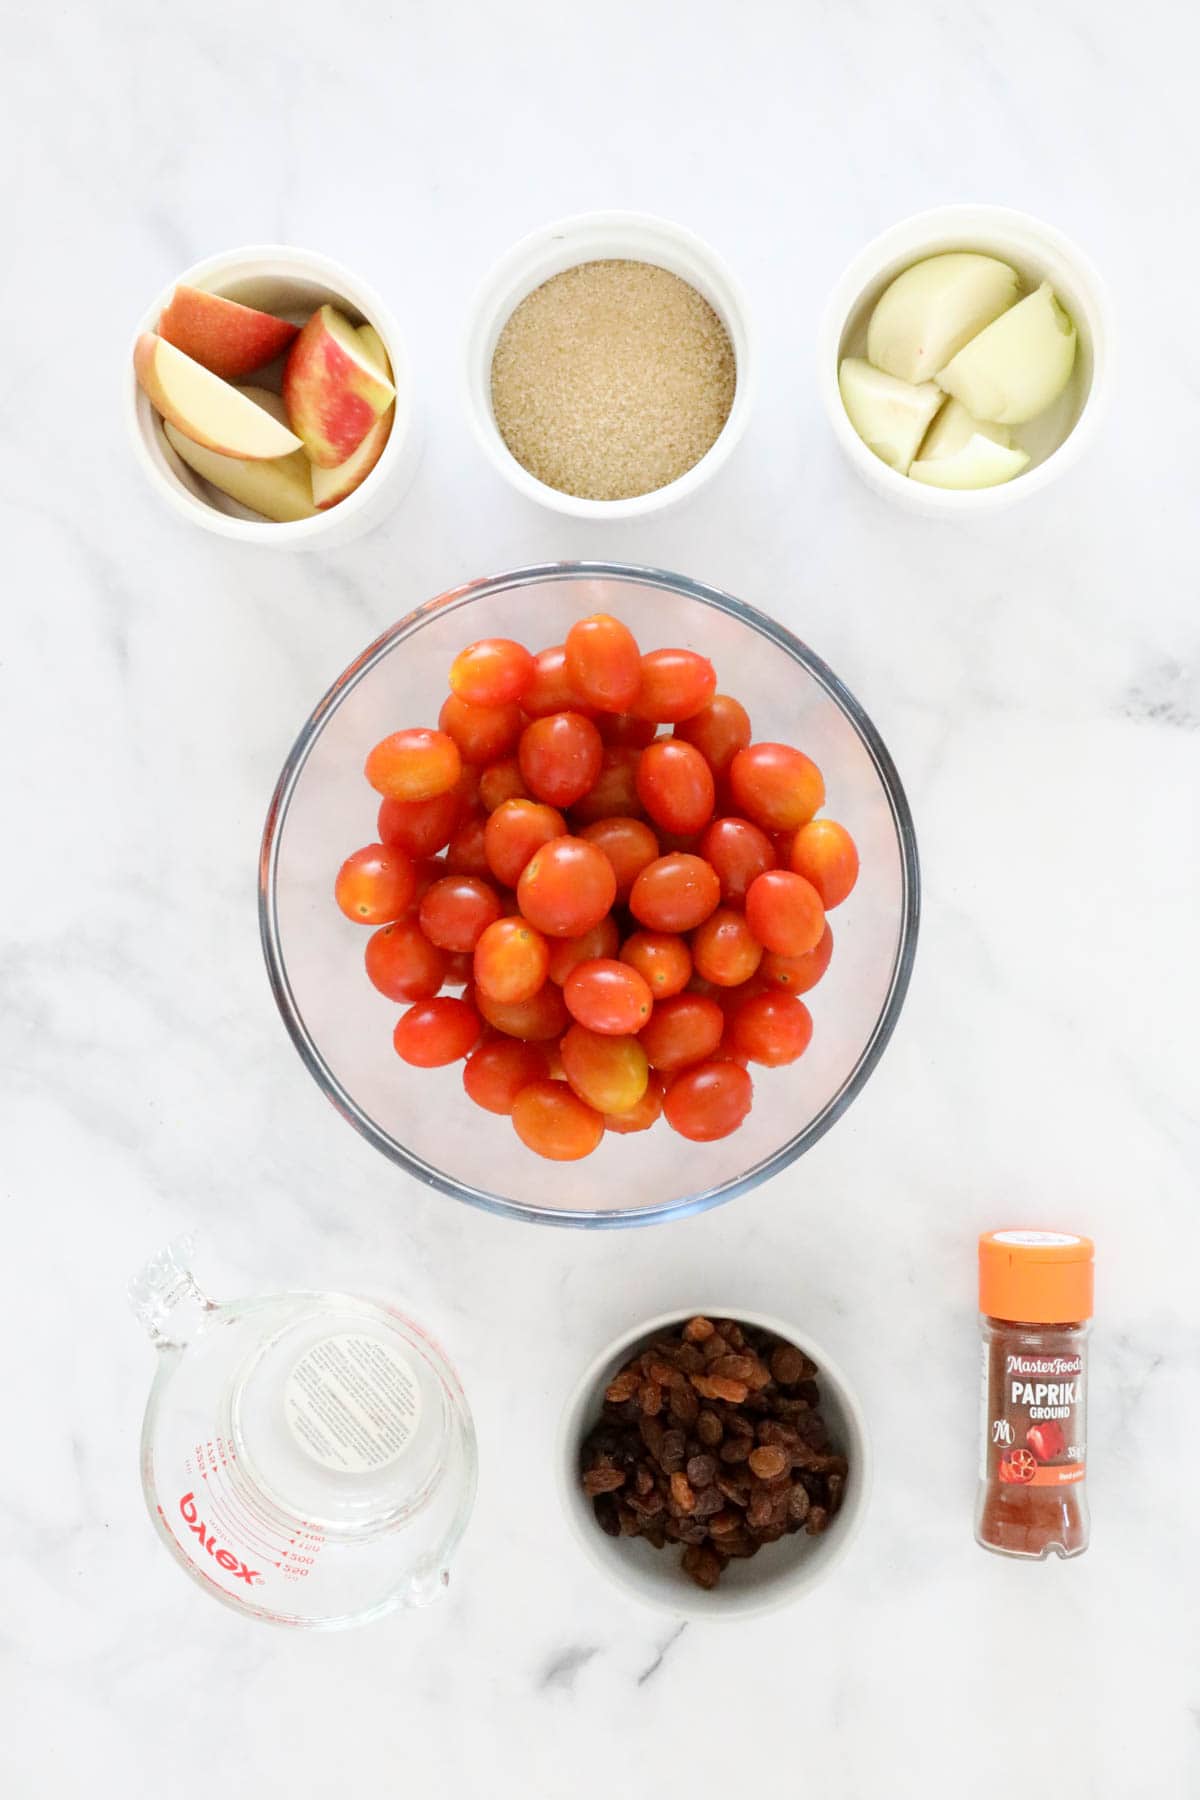 The ingredients for tomato chutney.